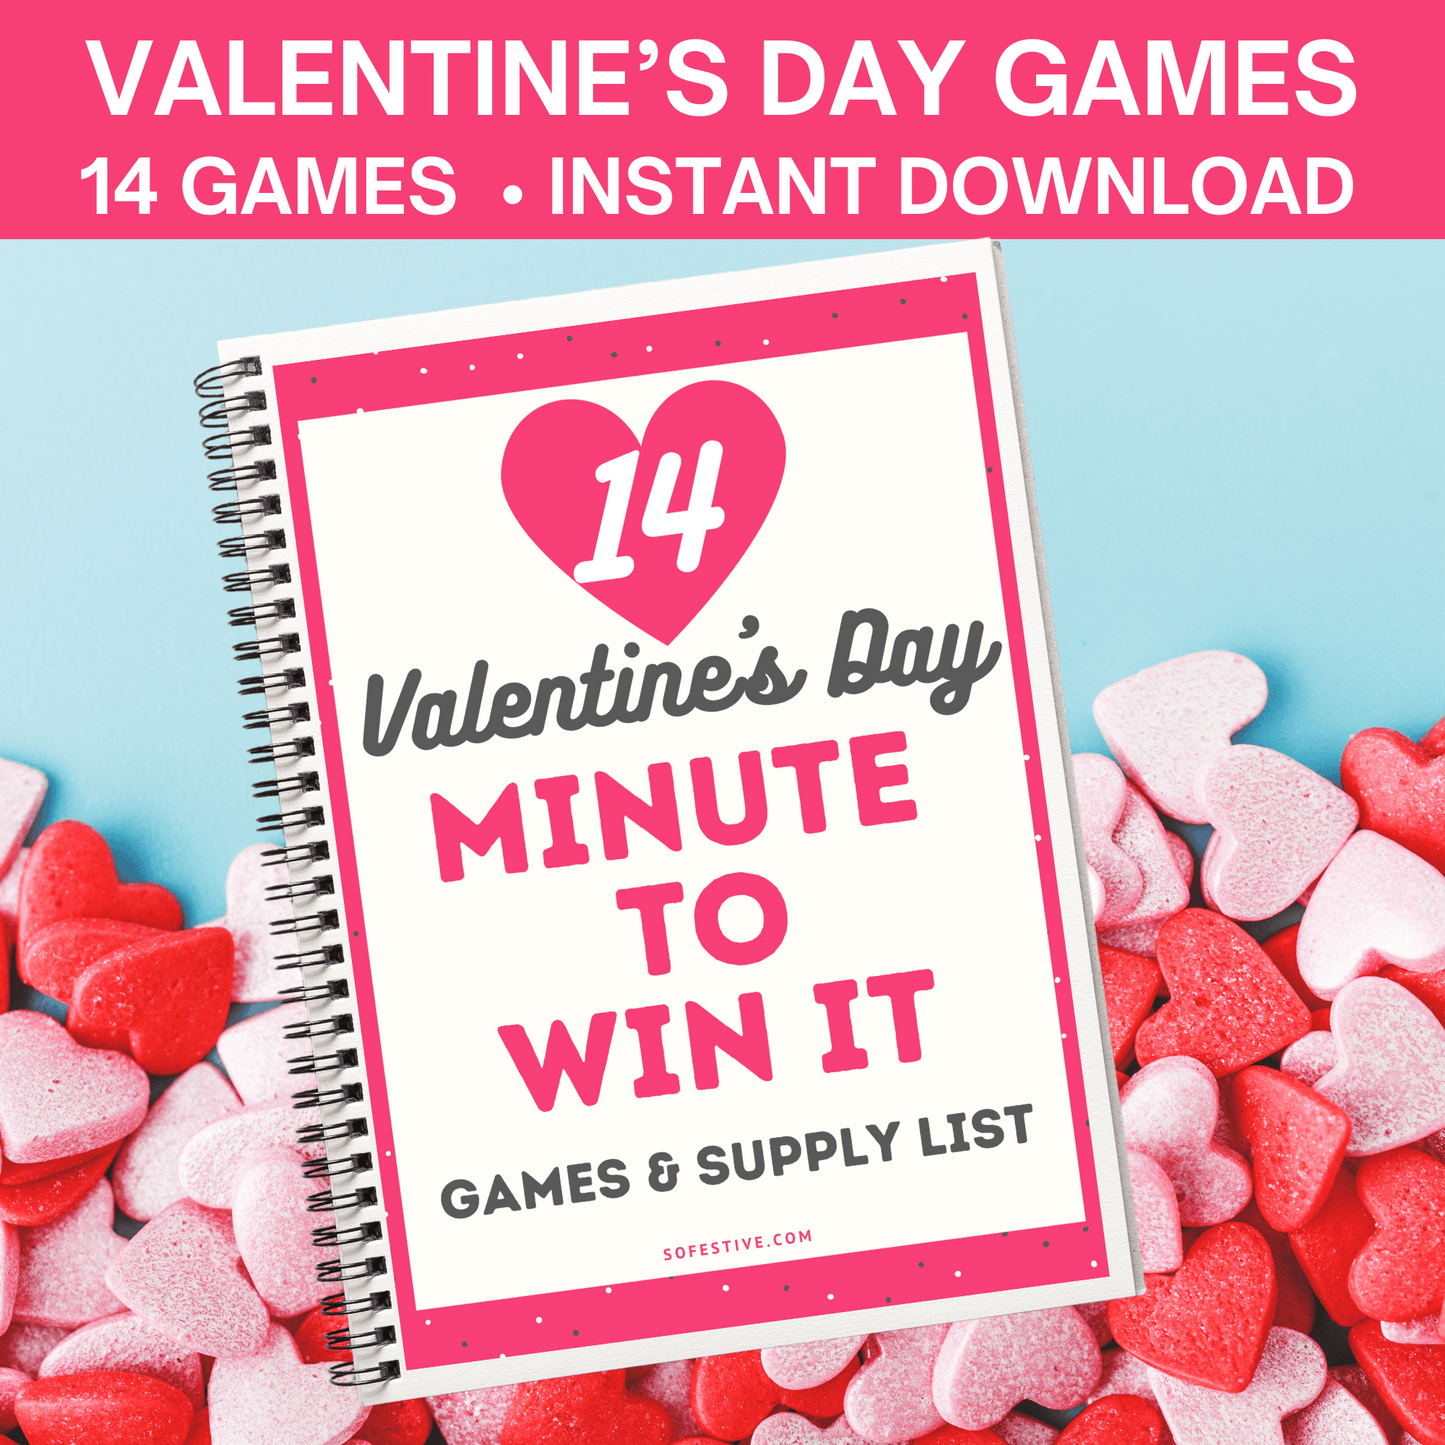 100-page Valentine's Day Party Bundle - Games & Decor ($40 value)